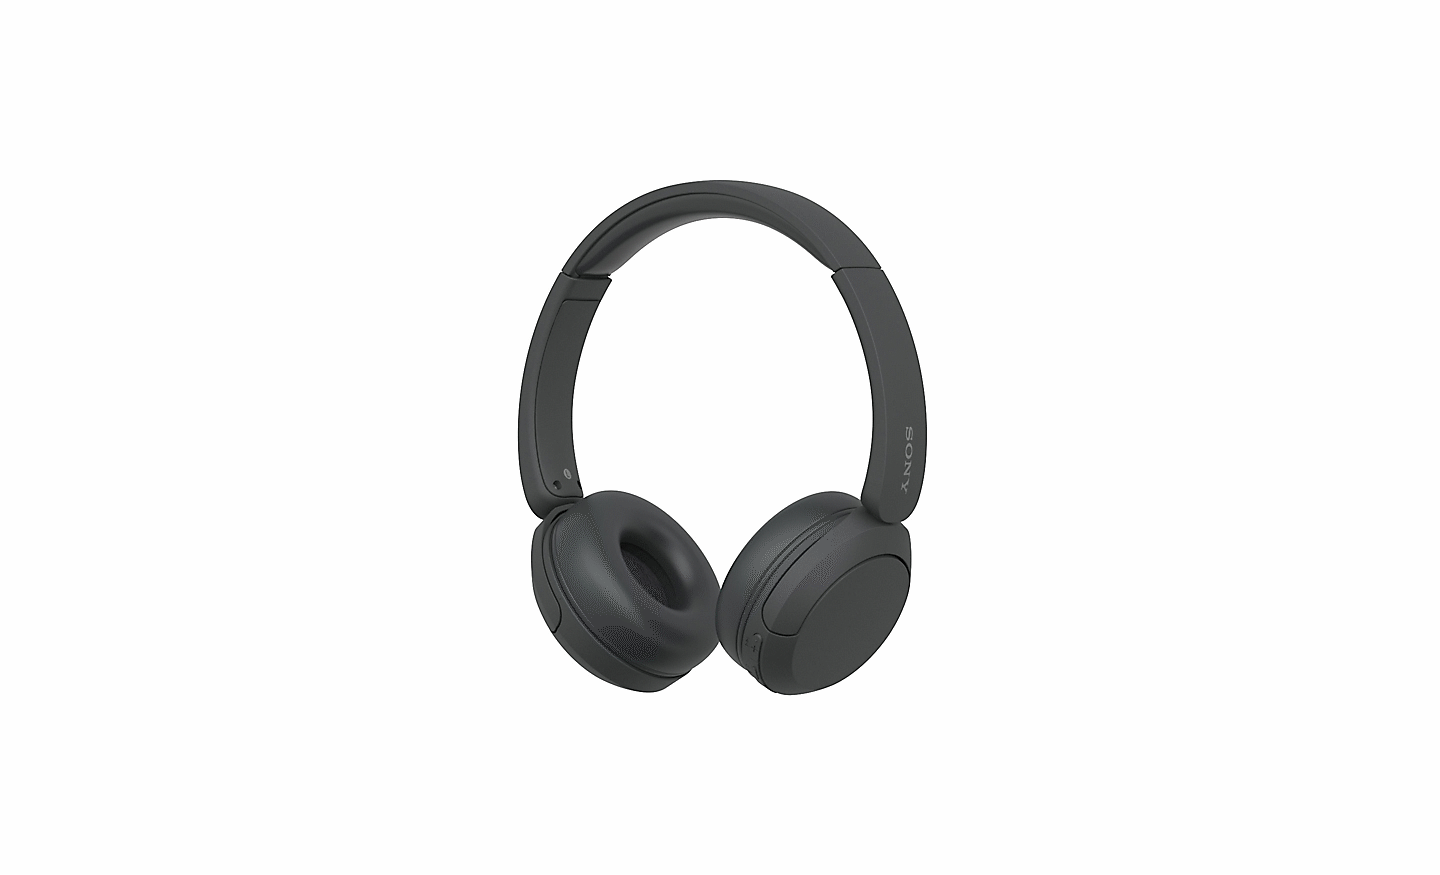 Slika crnih Sony WH-CH520 slušalica na beloj pozadini